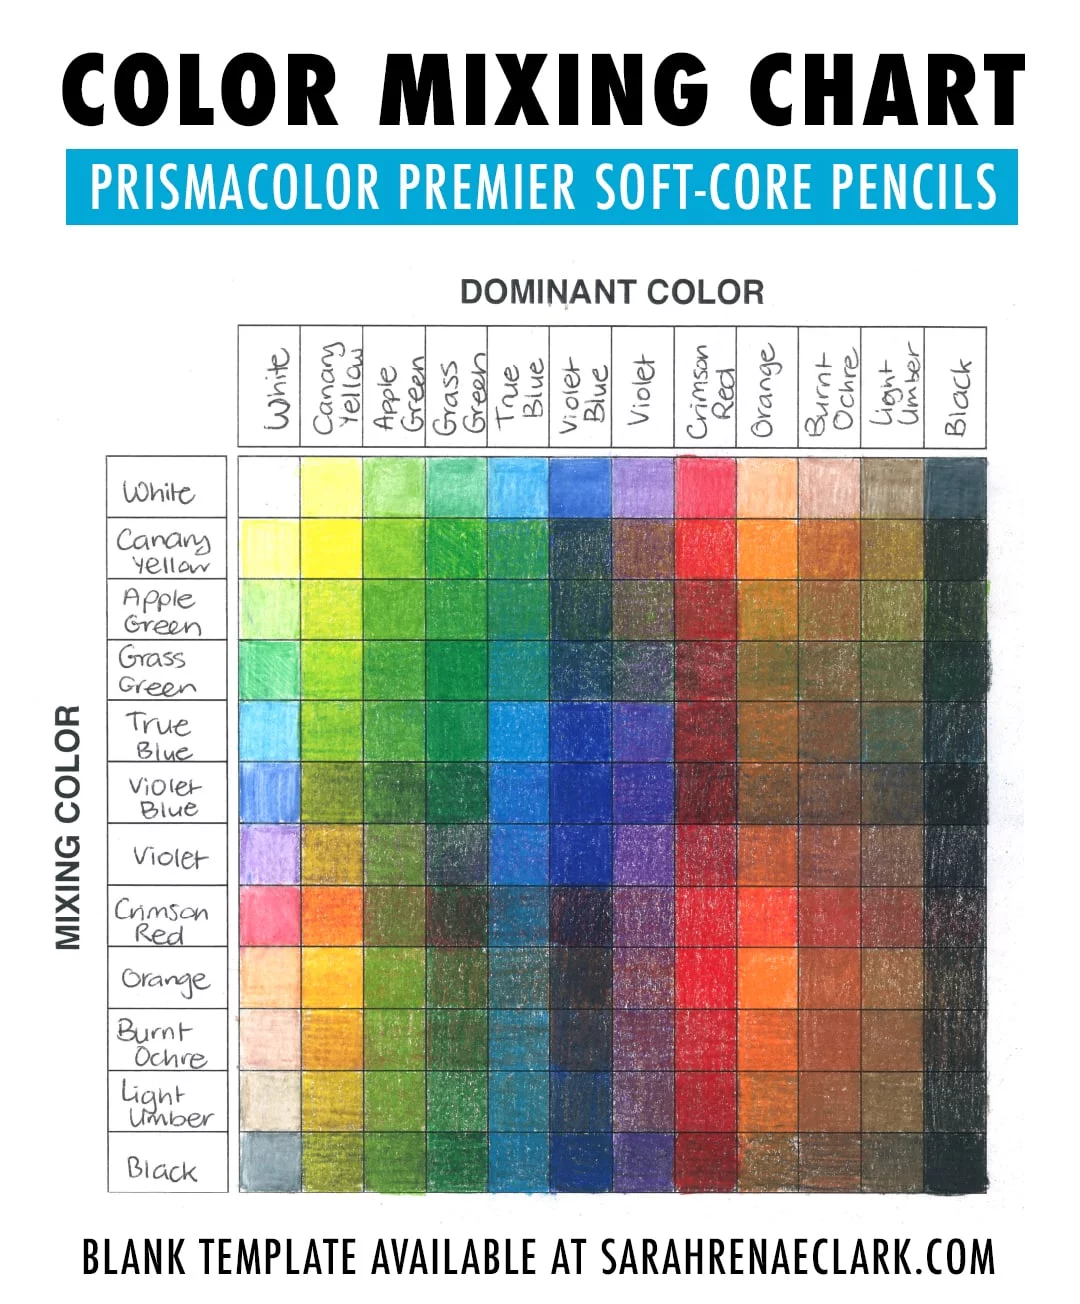 https://sarahrenaeclark.com/wp-content/uploads/2020/10/prismacolor-color-mixing-chart.jpg.webp